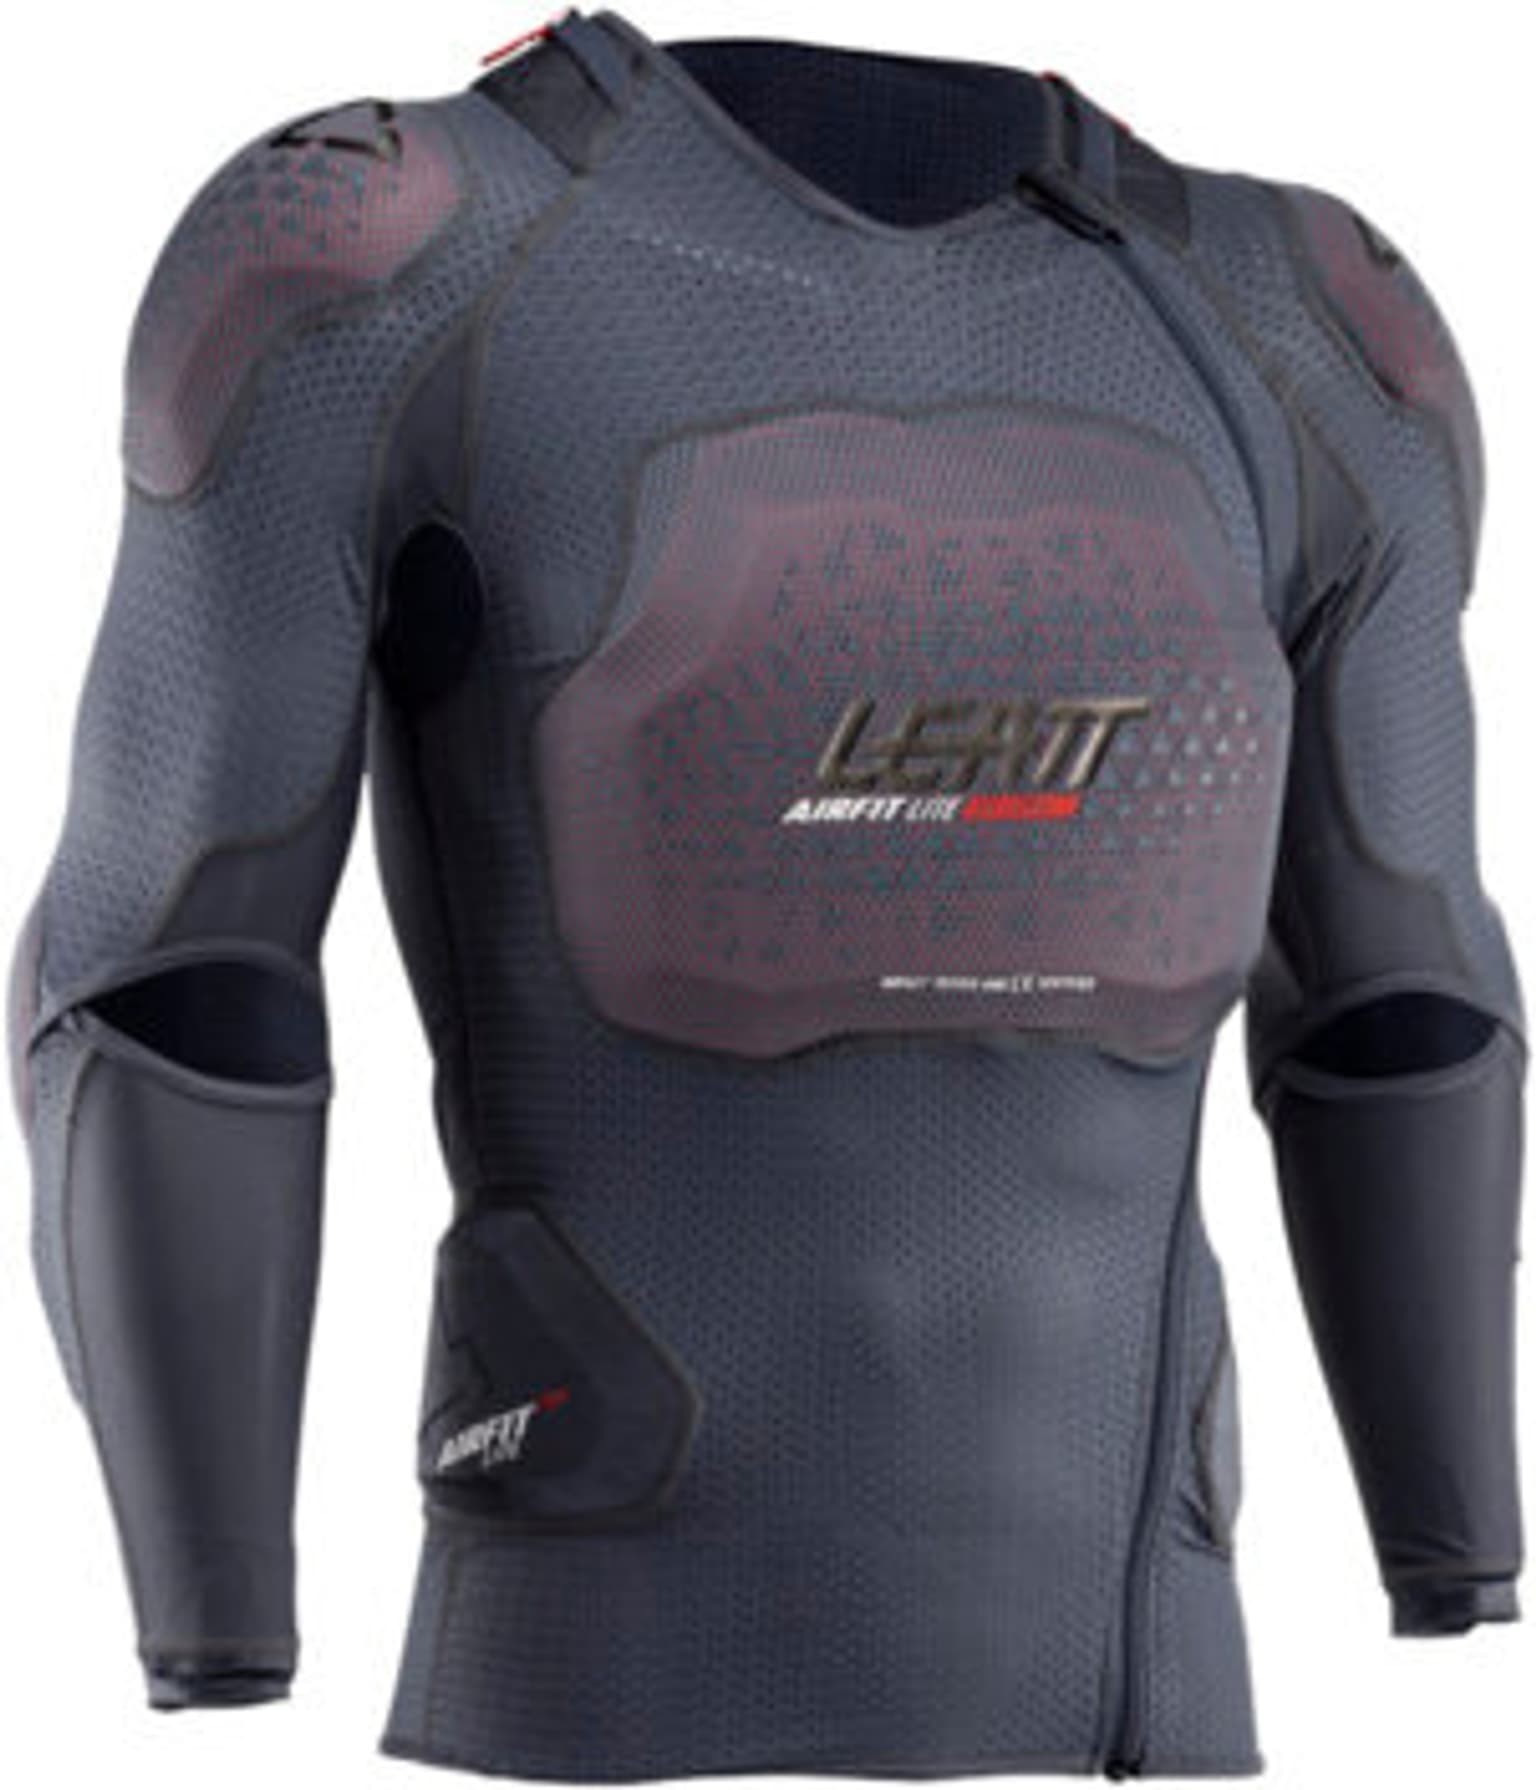 Leatt Leatt 3DF Body Protector Airfit lite Evo Protections noir 1